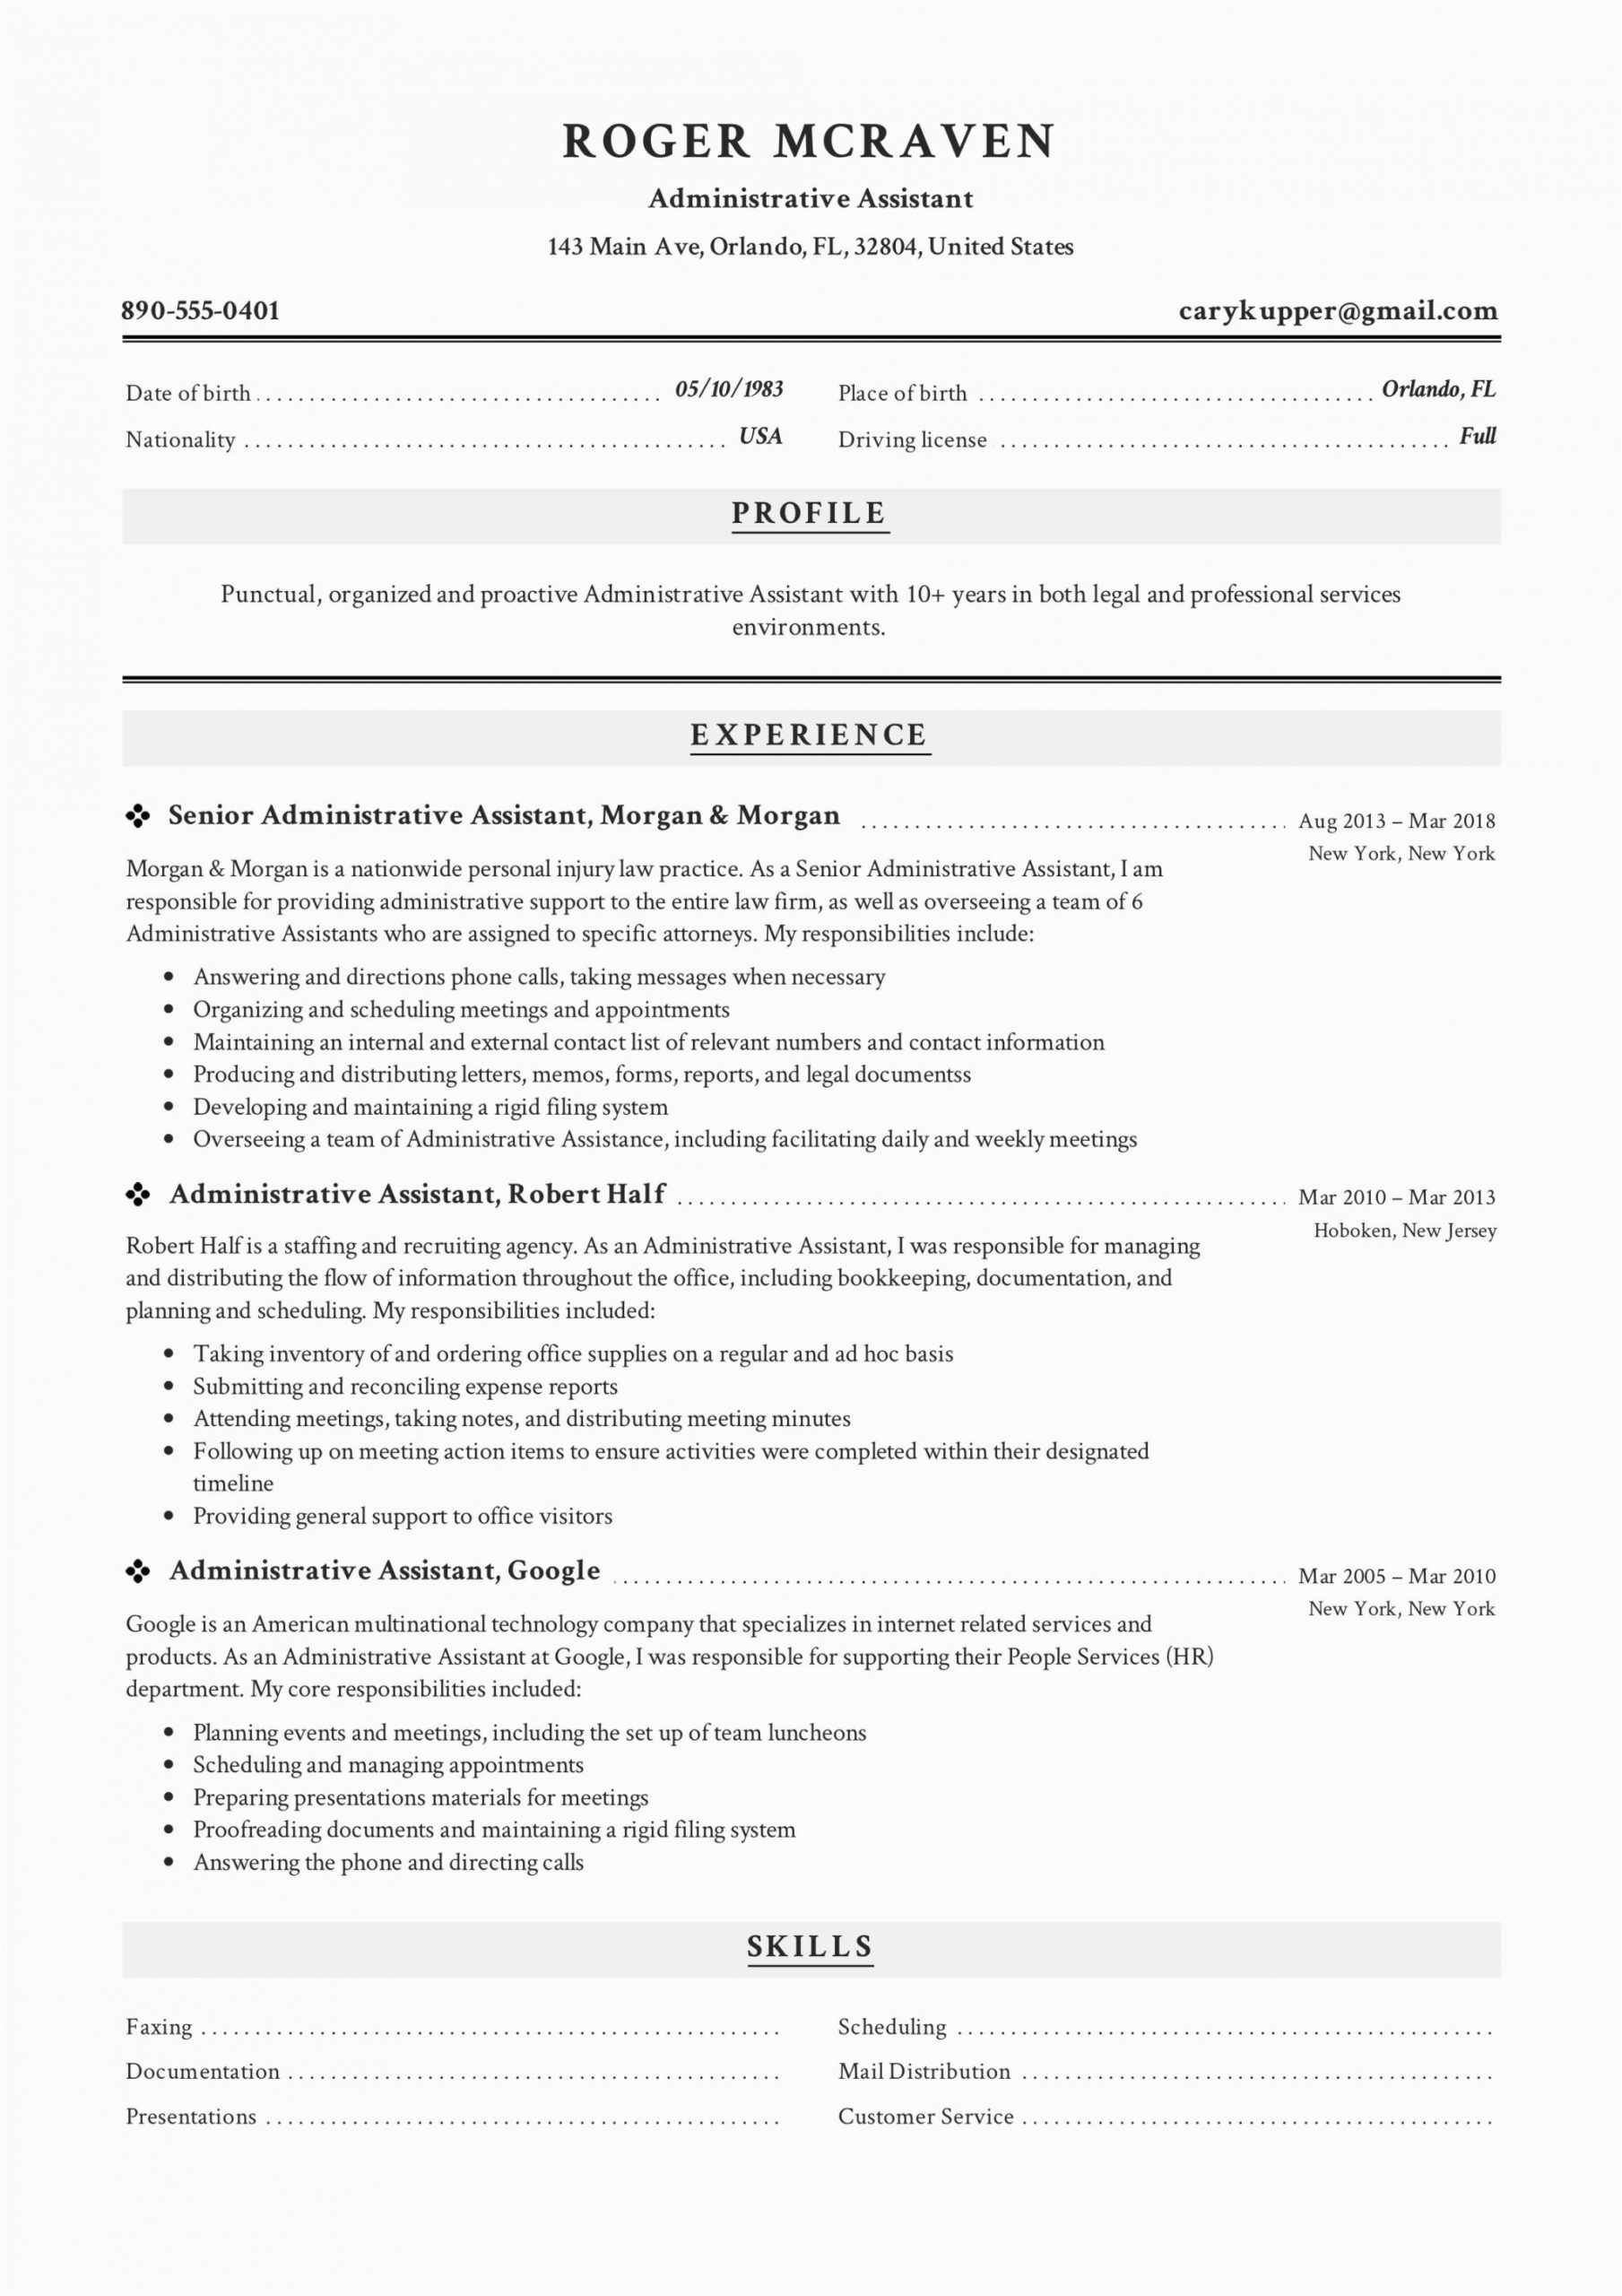 Sample Professional Resume for Administrative assistant Full Guide Administrative assistant Resume [ 12 Samples